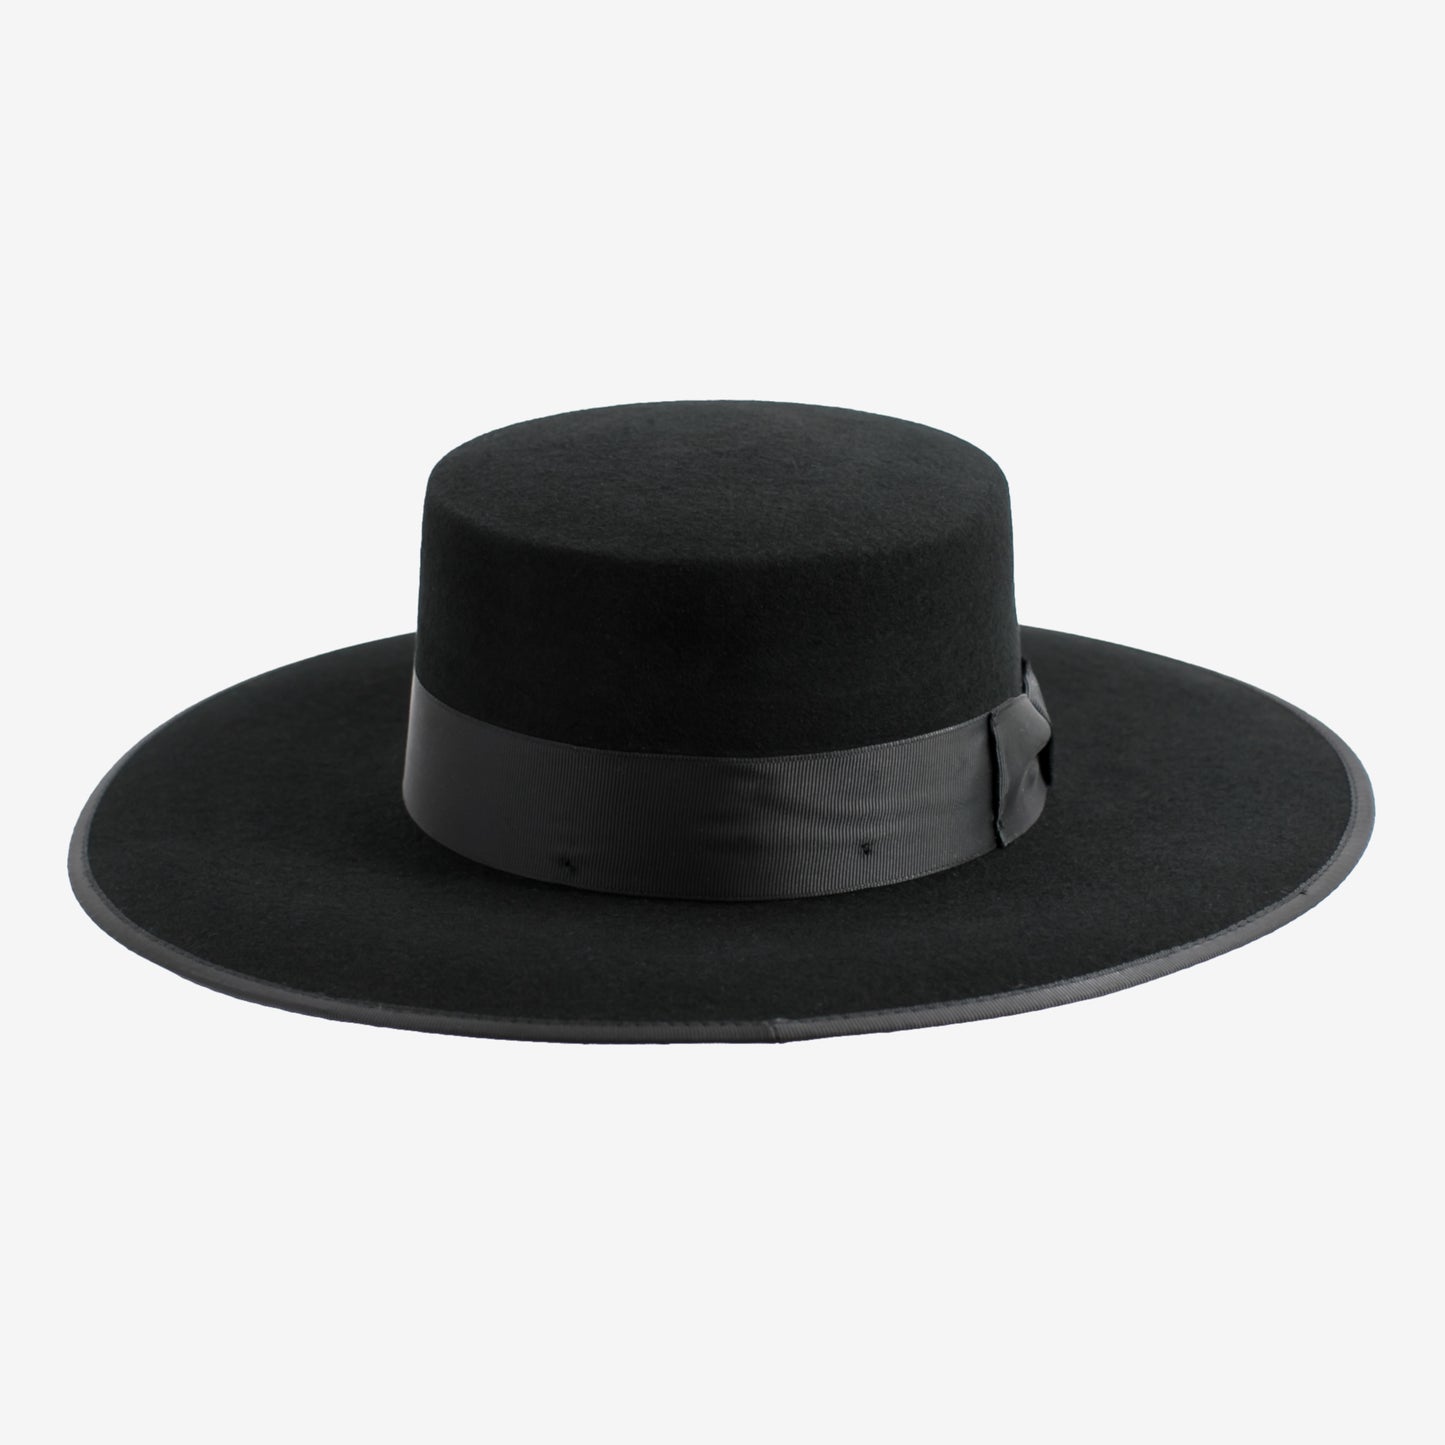 mindo-hats-claudia-cordobes-wool-hat-black-back